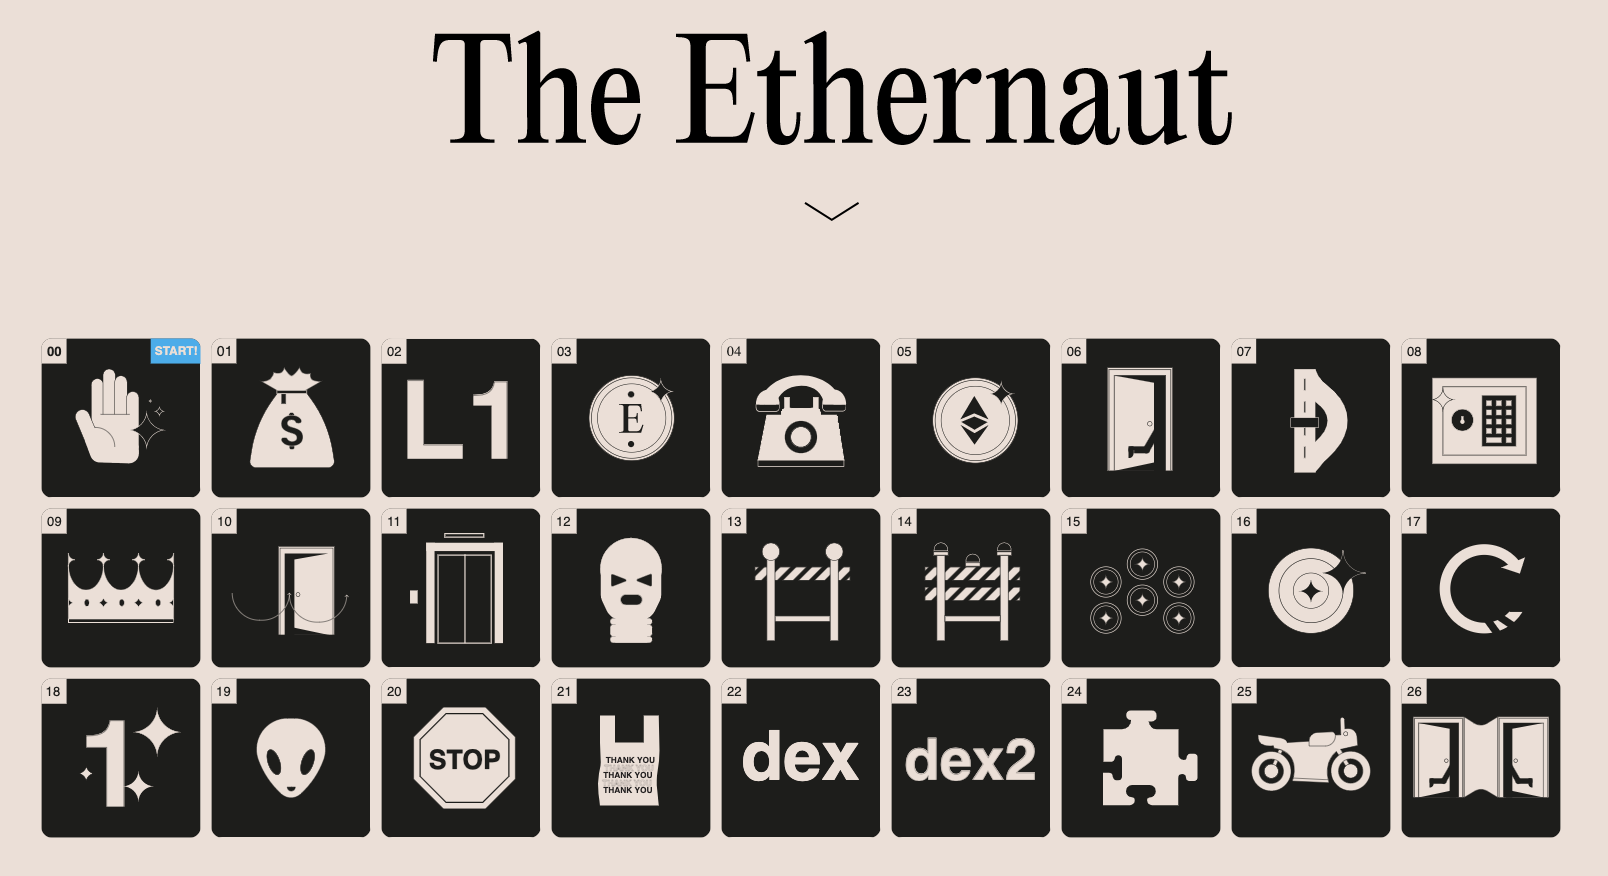 The Ethernaut